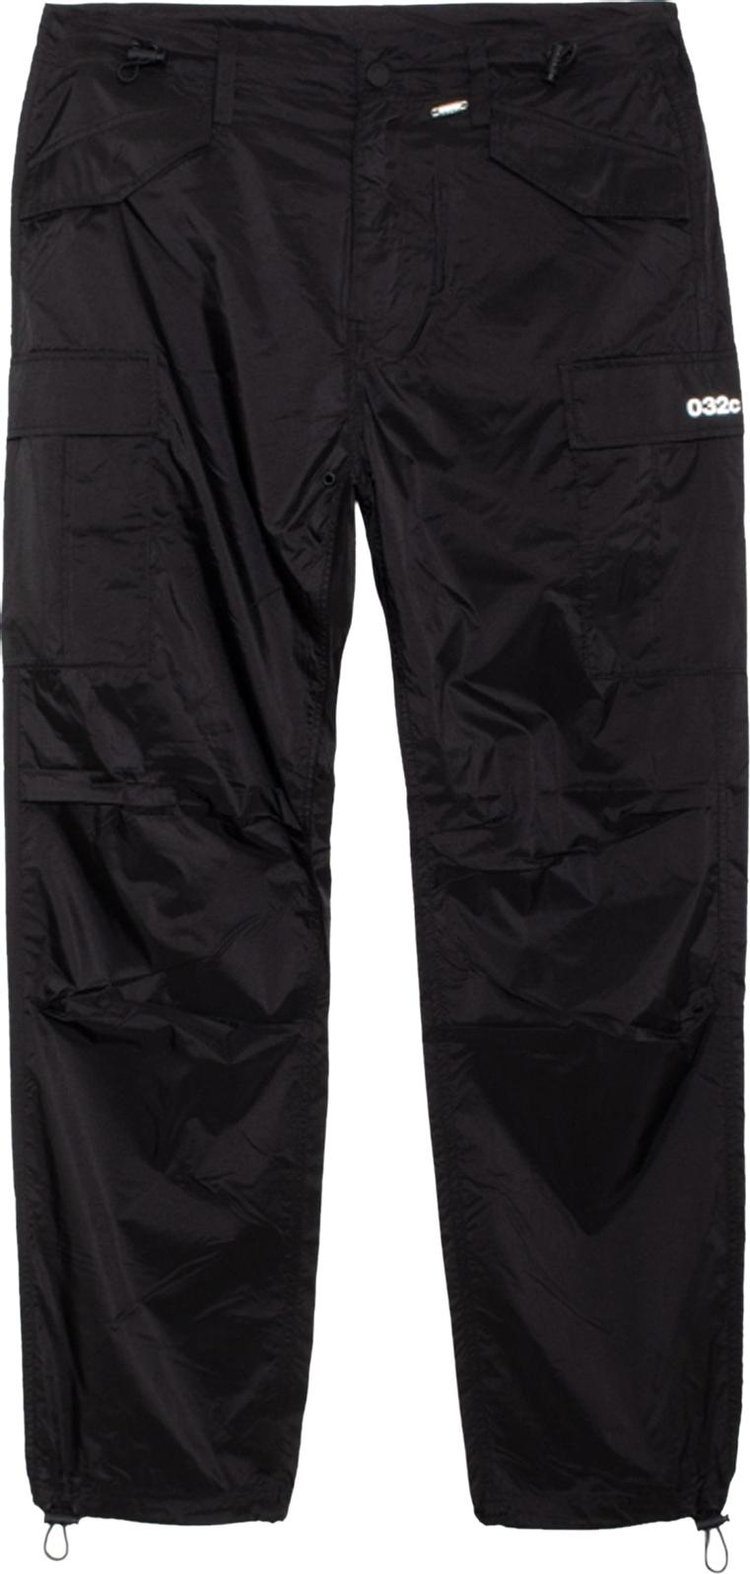 032C Translucent Nylon Pants 'Black'